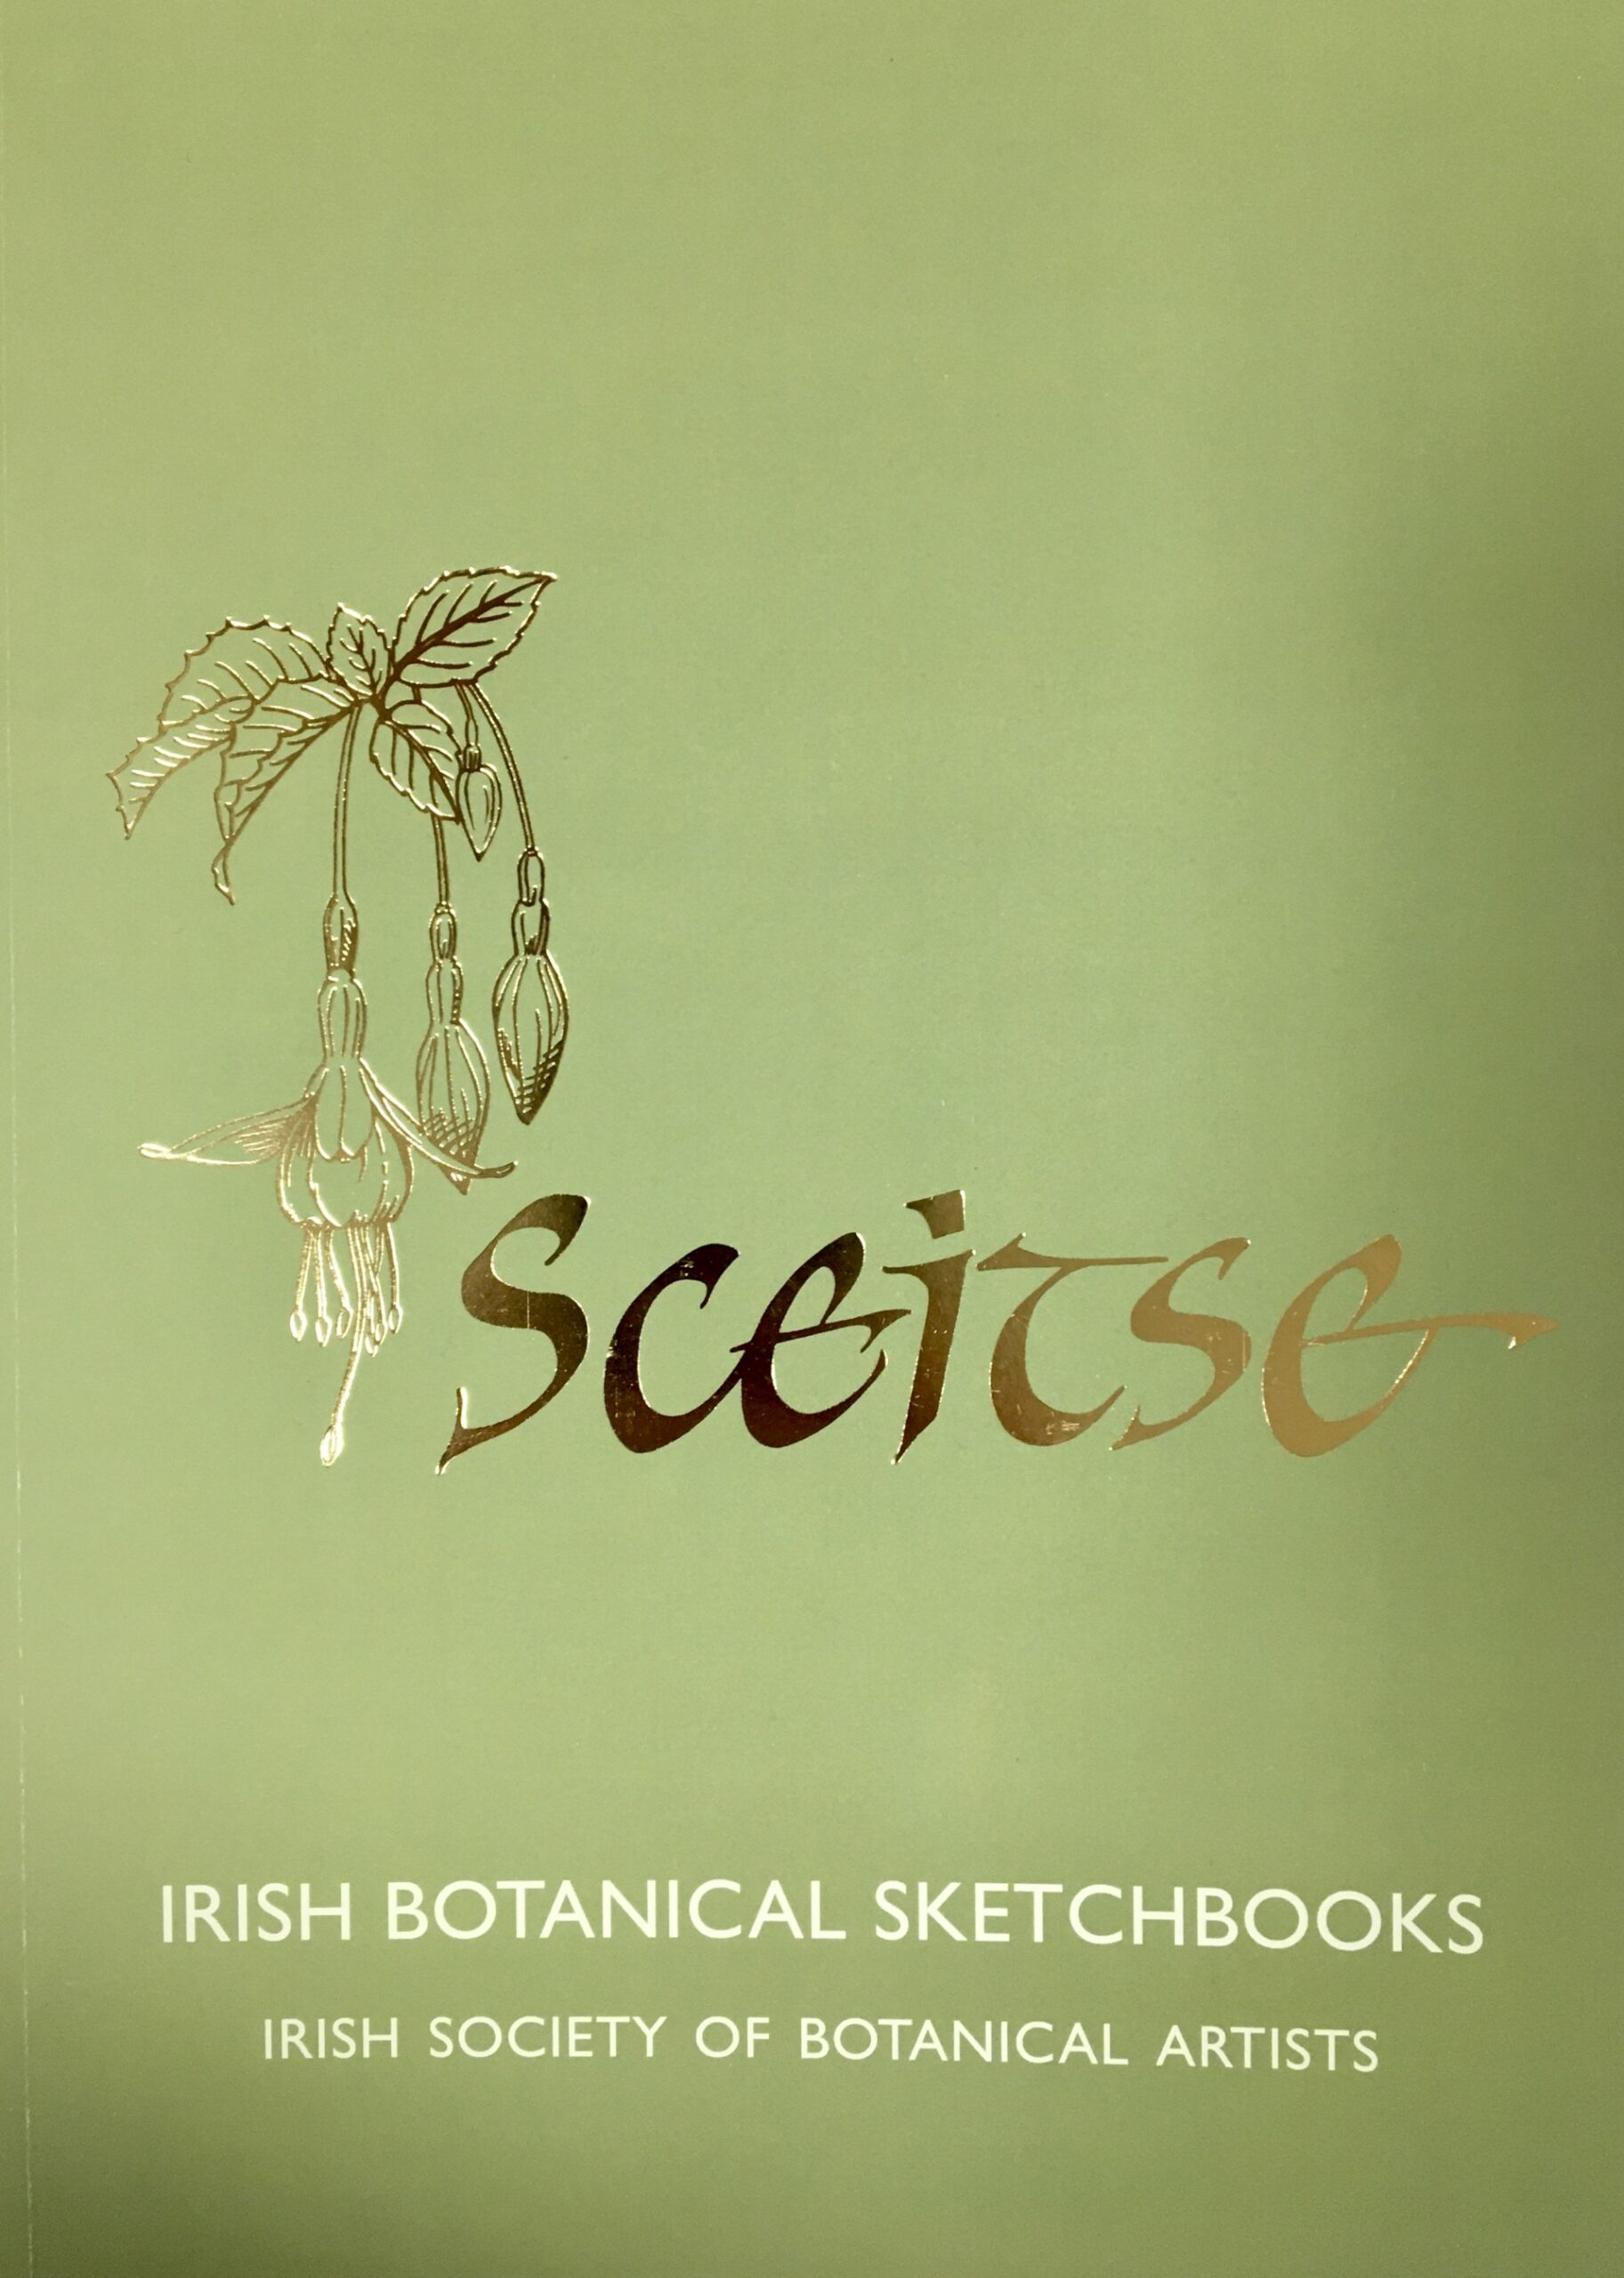 Sceitse : Irish Botanical Sketchbooks | The Irish Society of Botanical Artists | Charlie Byrne's